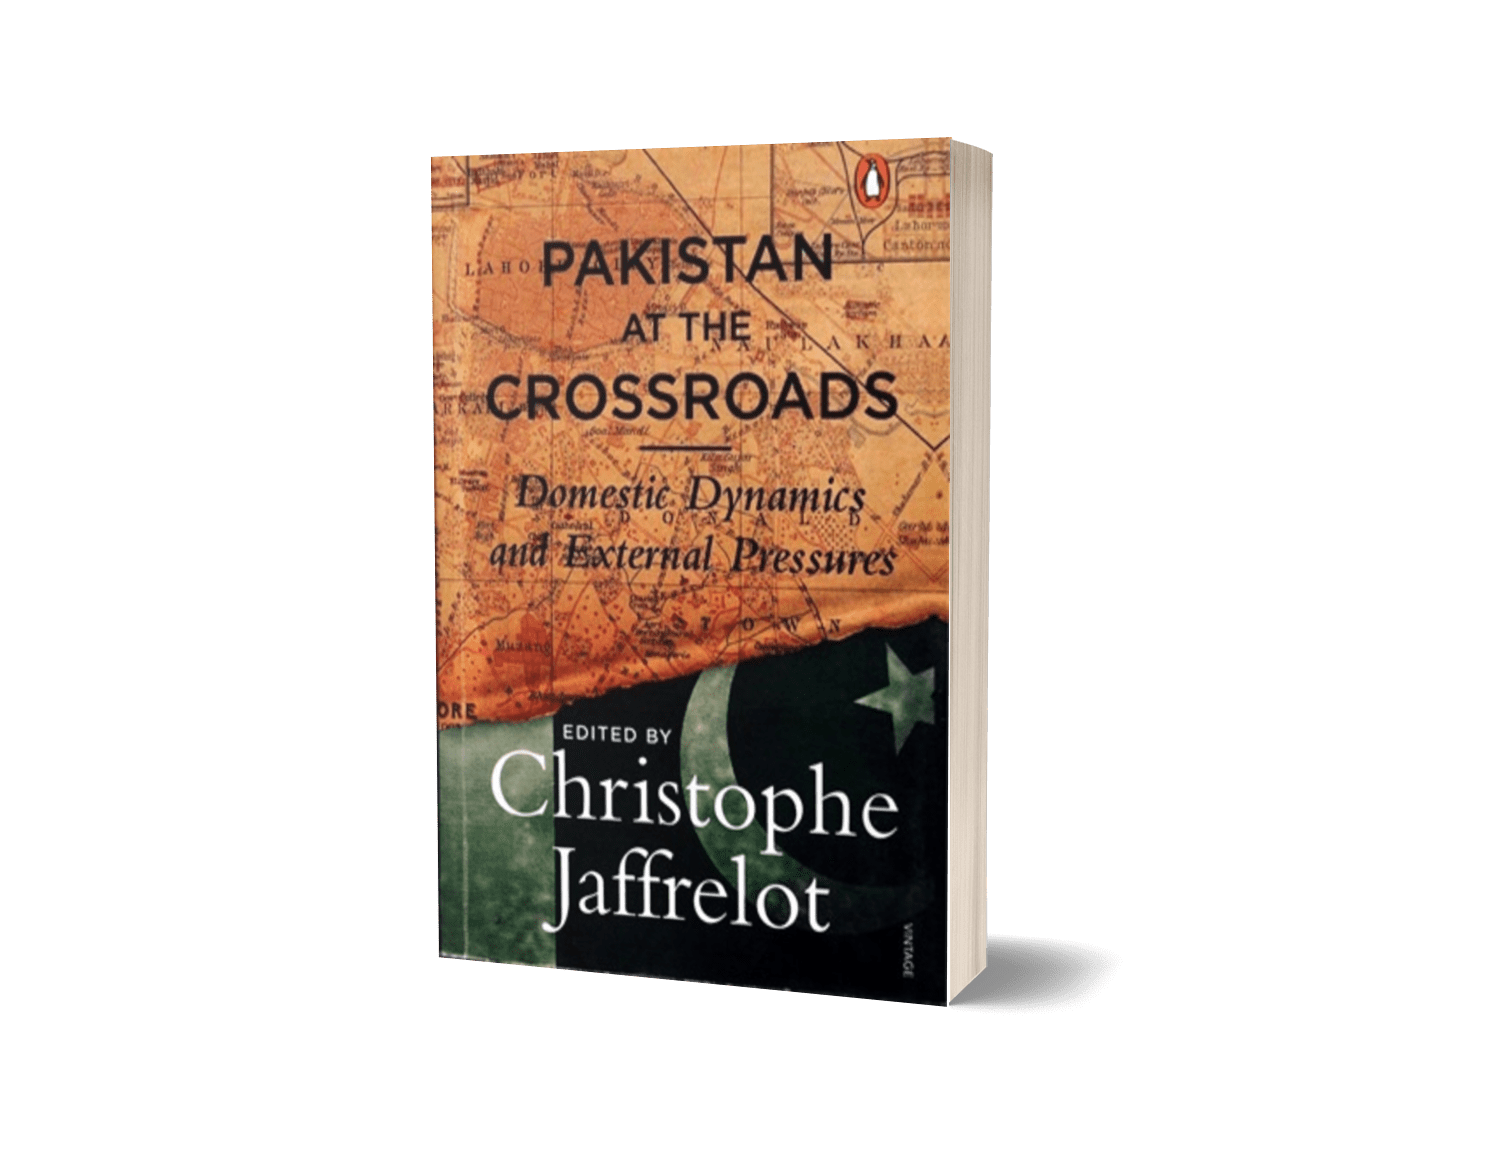 Pakistan at the Crossrroads by Christophe Jaffrelot